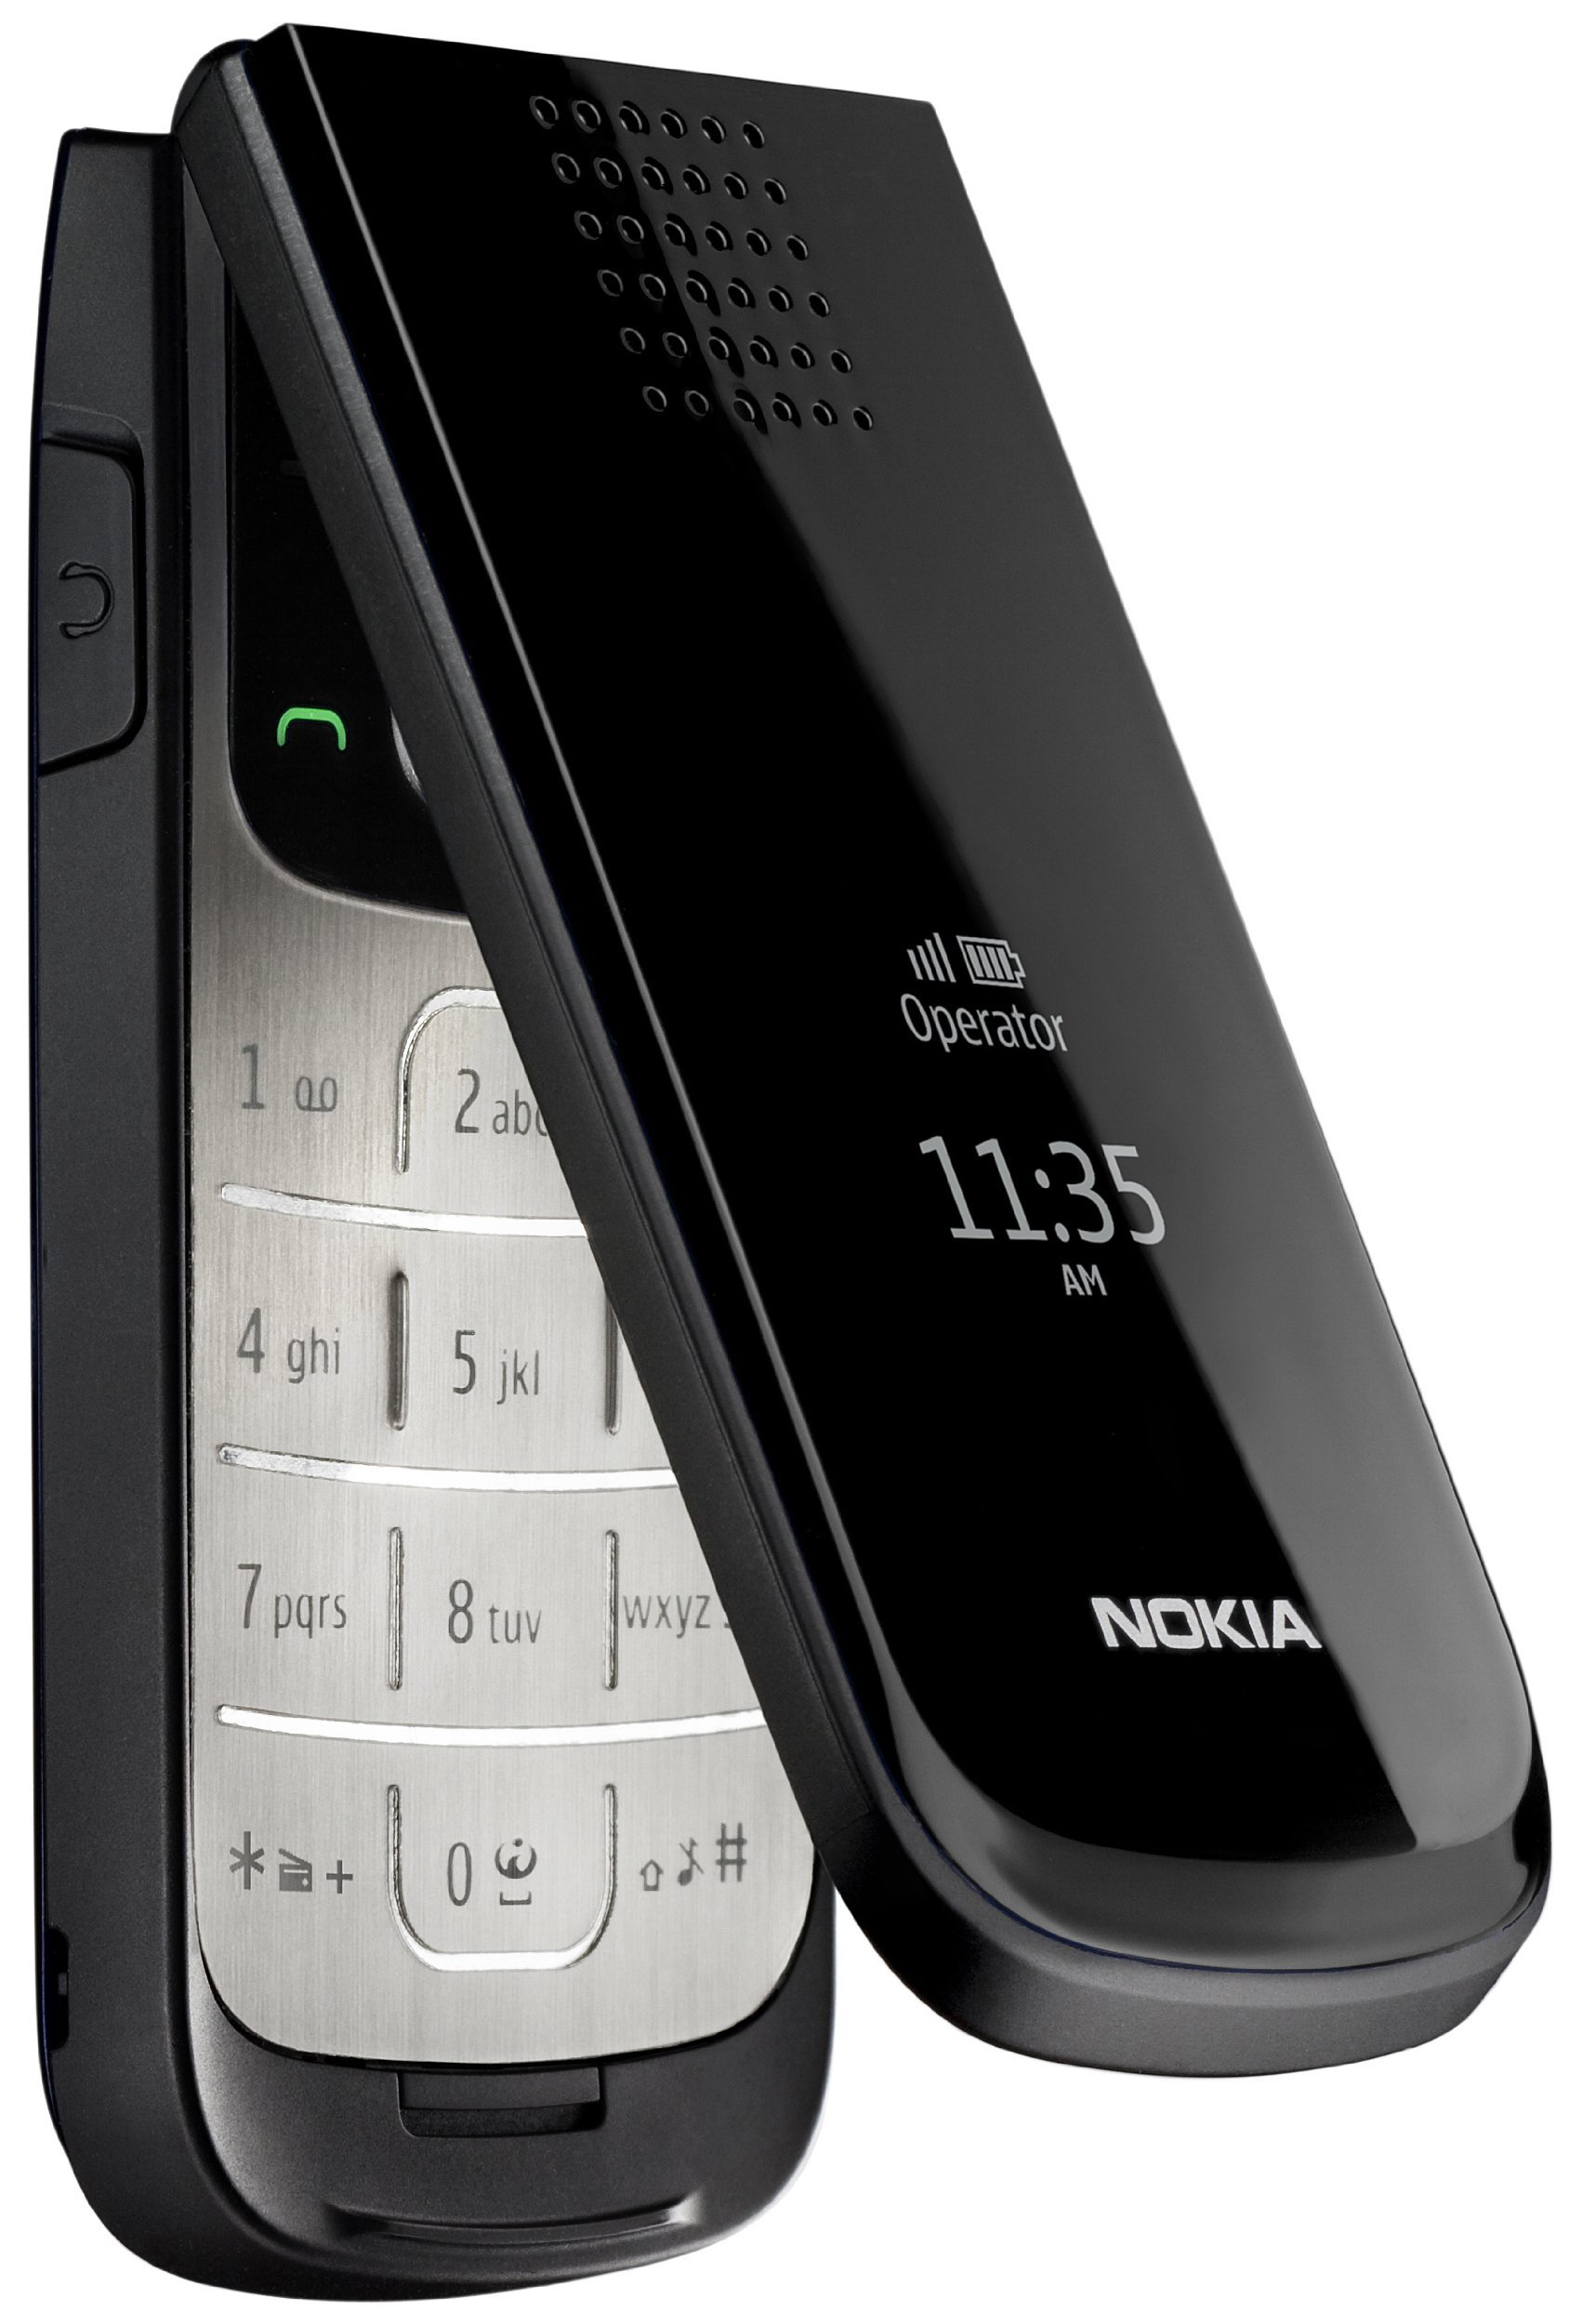 Nokia 2720 fold Klapp-Handy Quad-Band Phone GPRS Bluetooth Kamera MP3 wie Neu